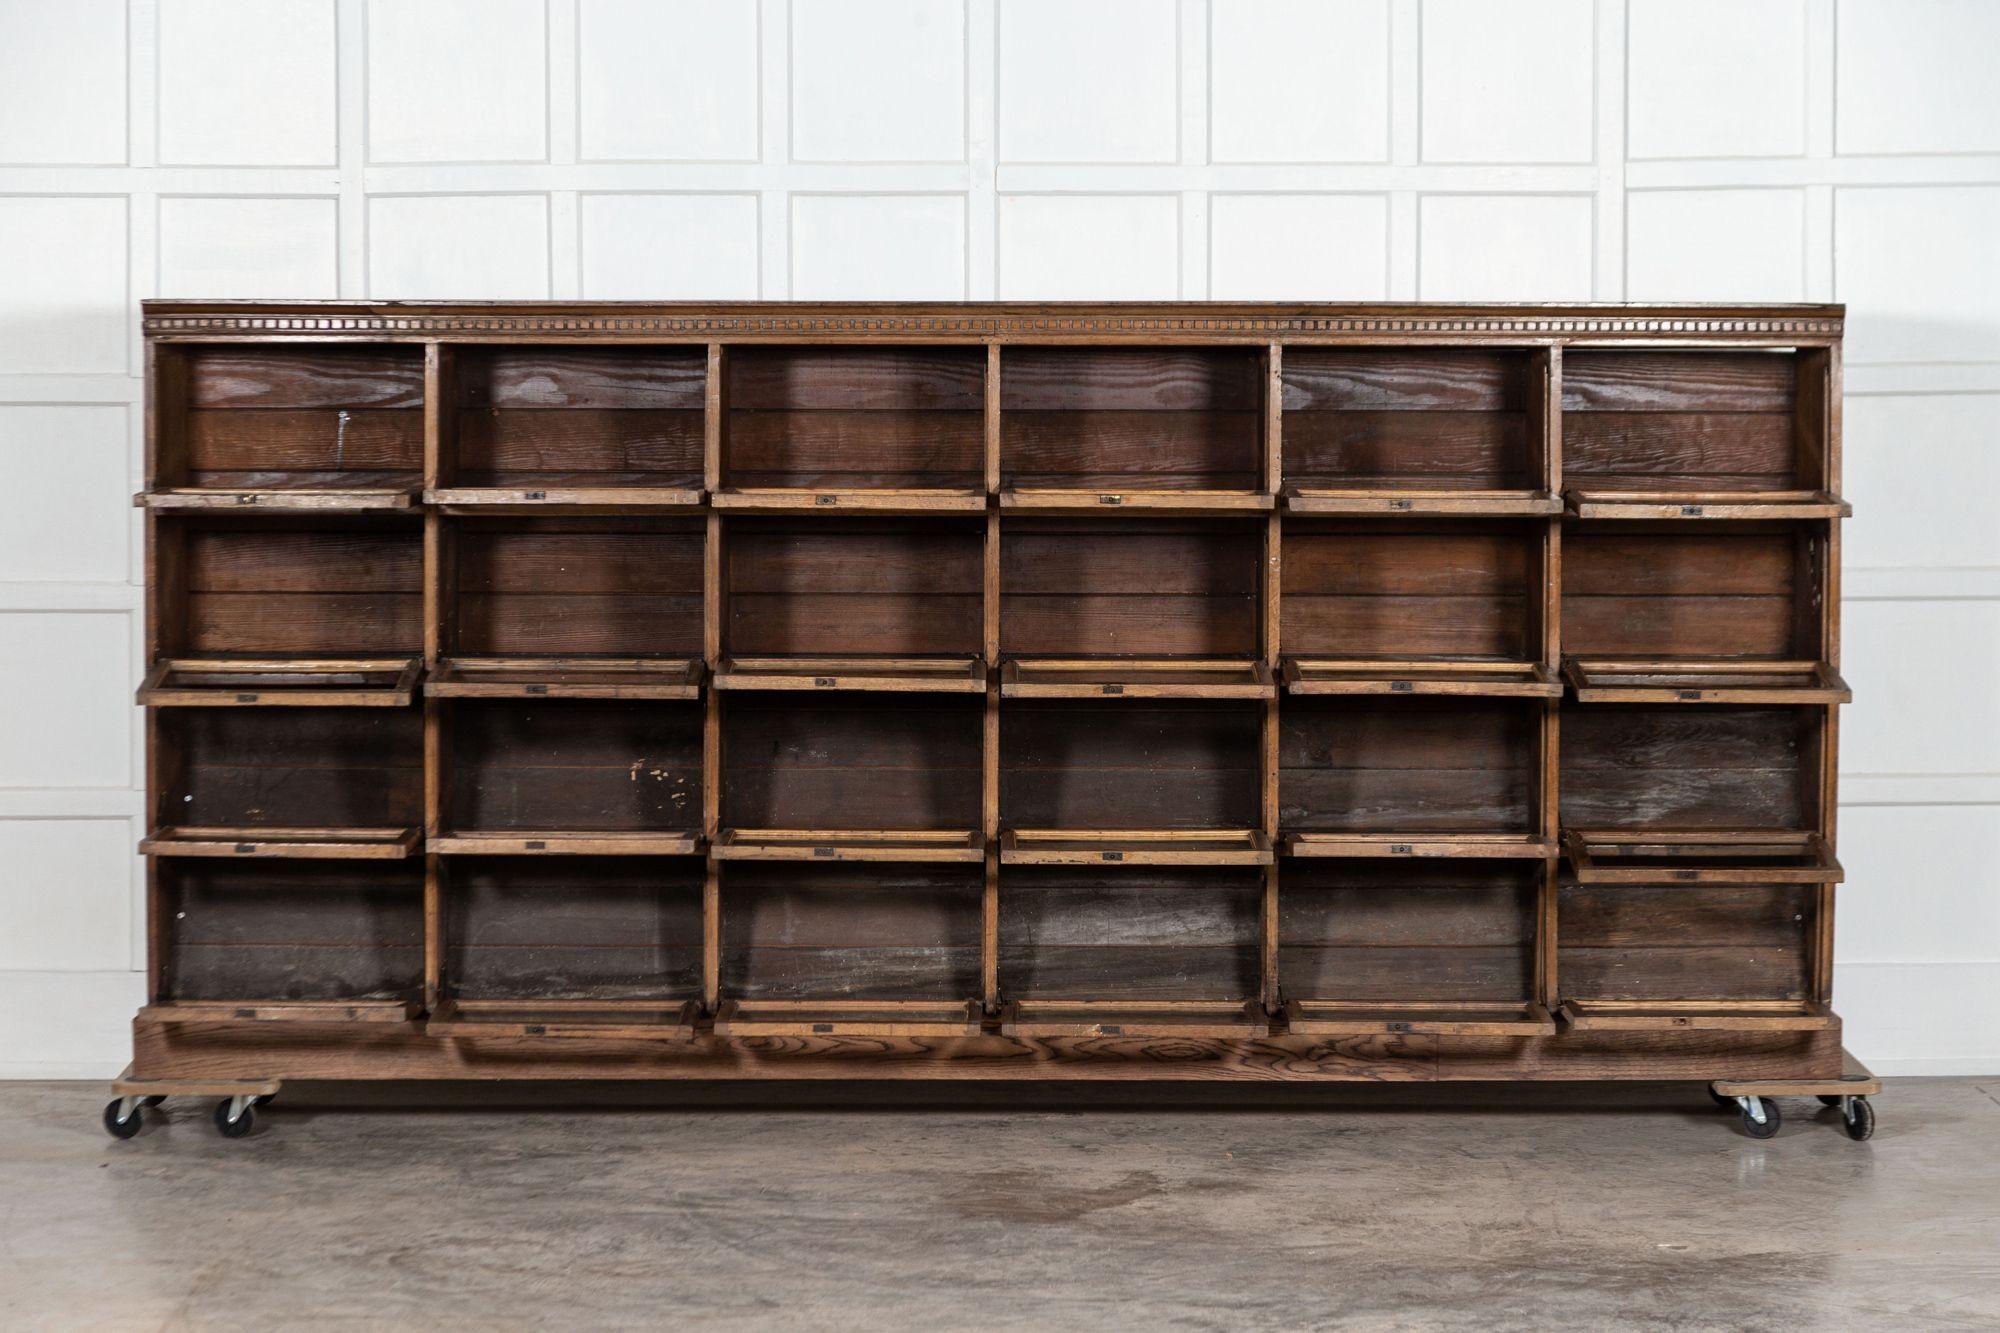 circa 1890
Monumental English Oak Barristers Bookcase Cabinet
sku 1347
W310 x D46 x H141 cm.